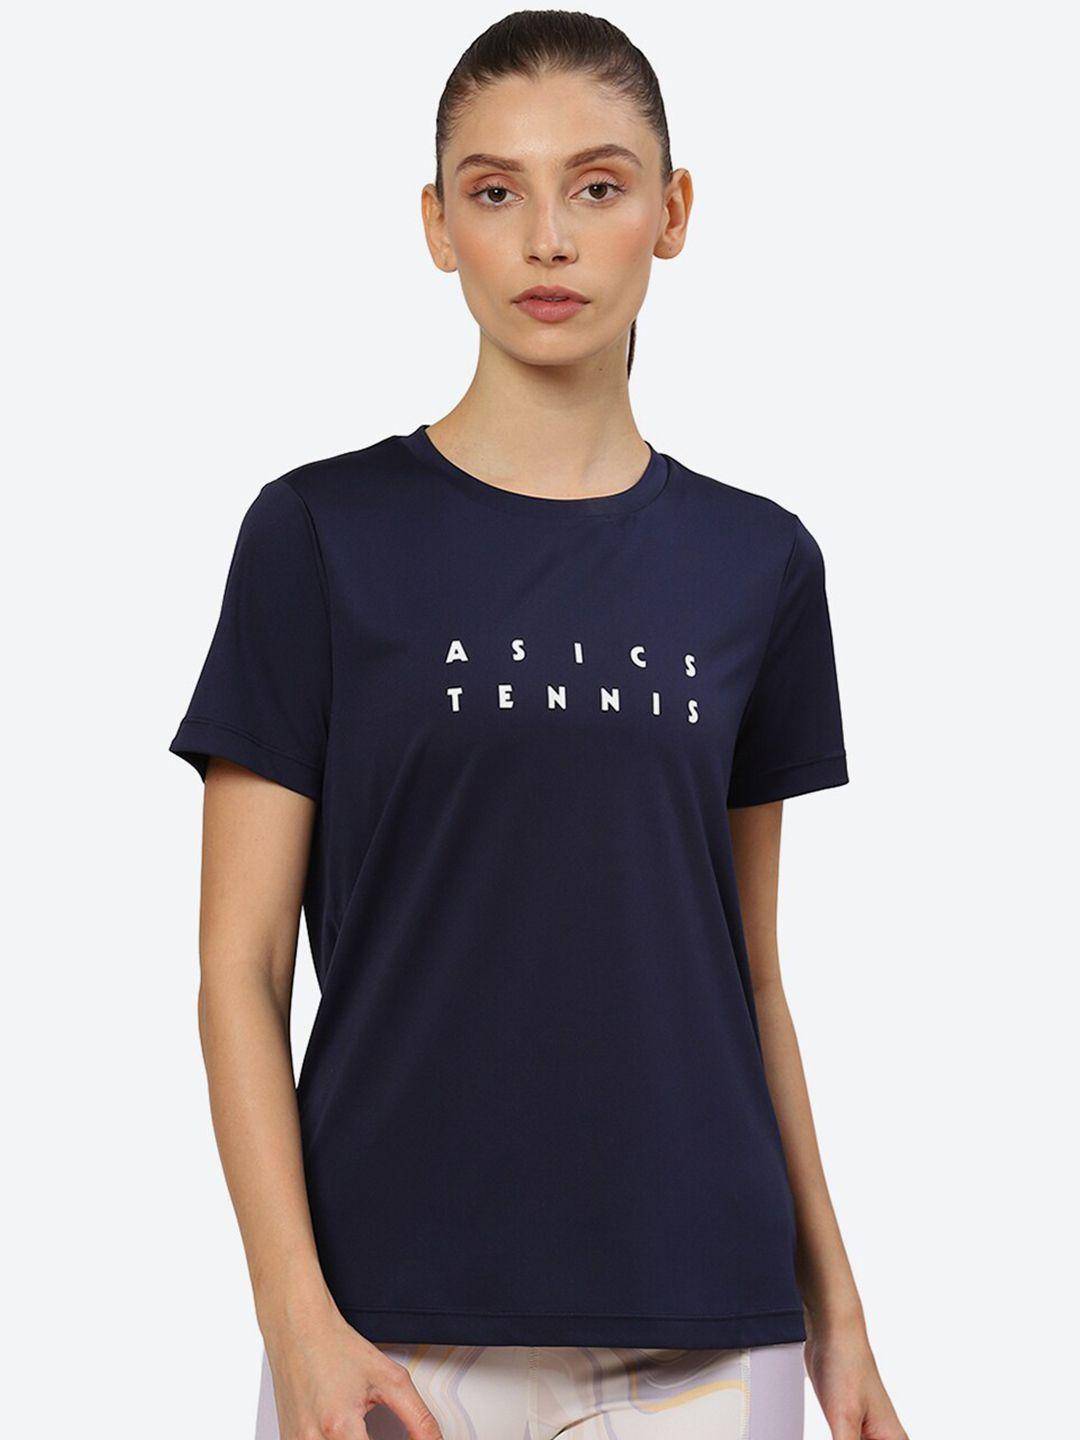 asics-women-typography-printed-t-shirt